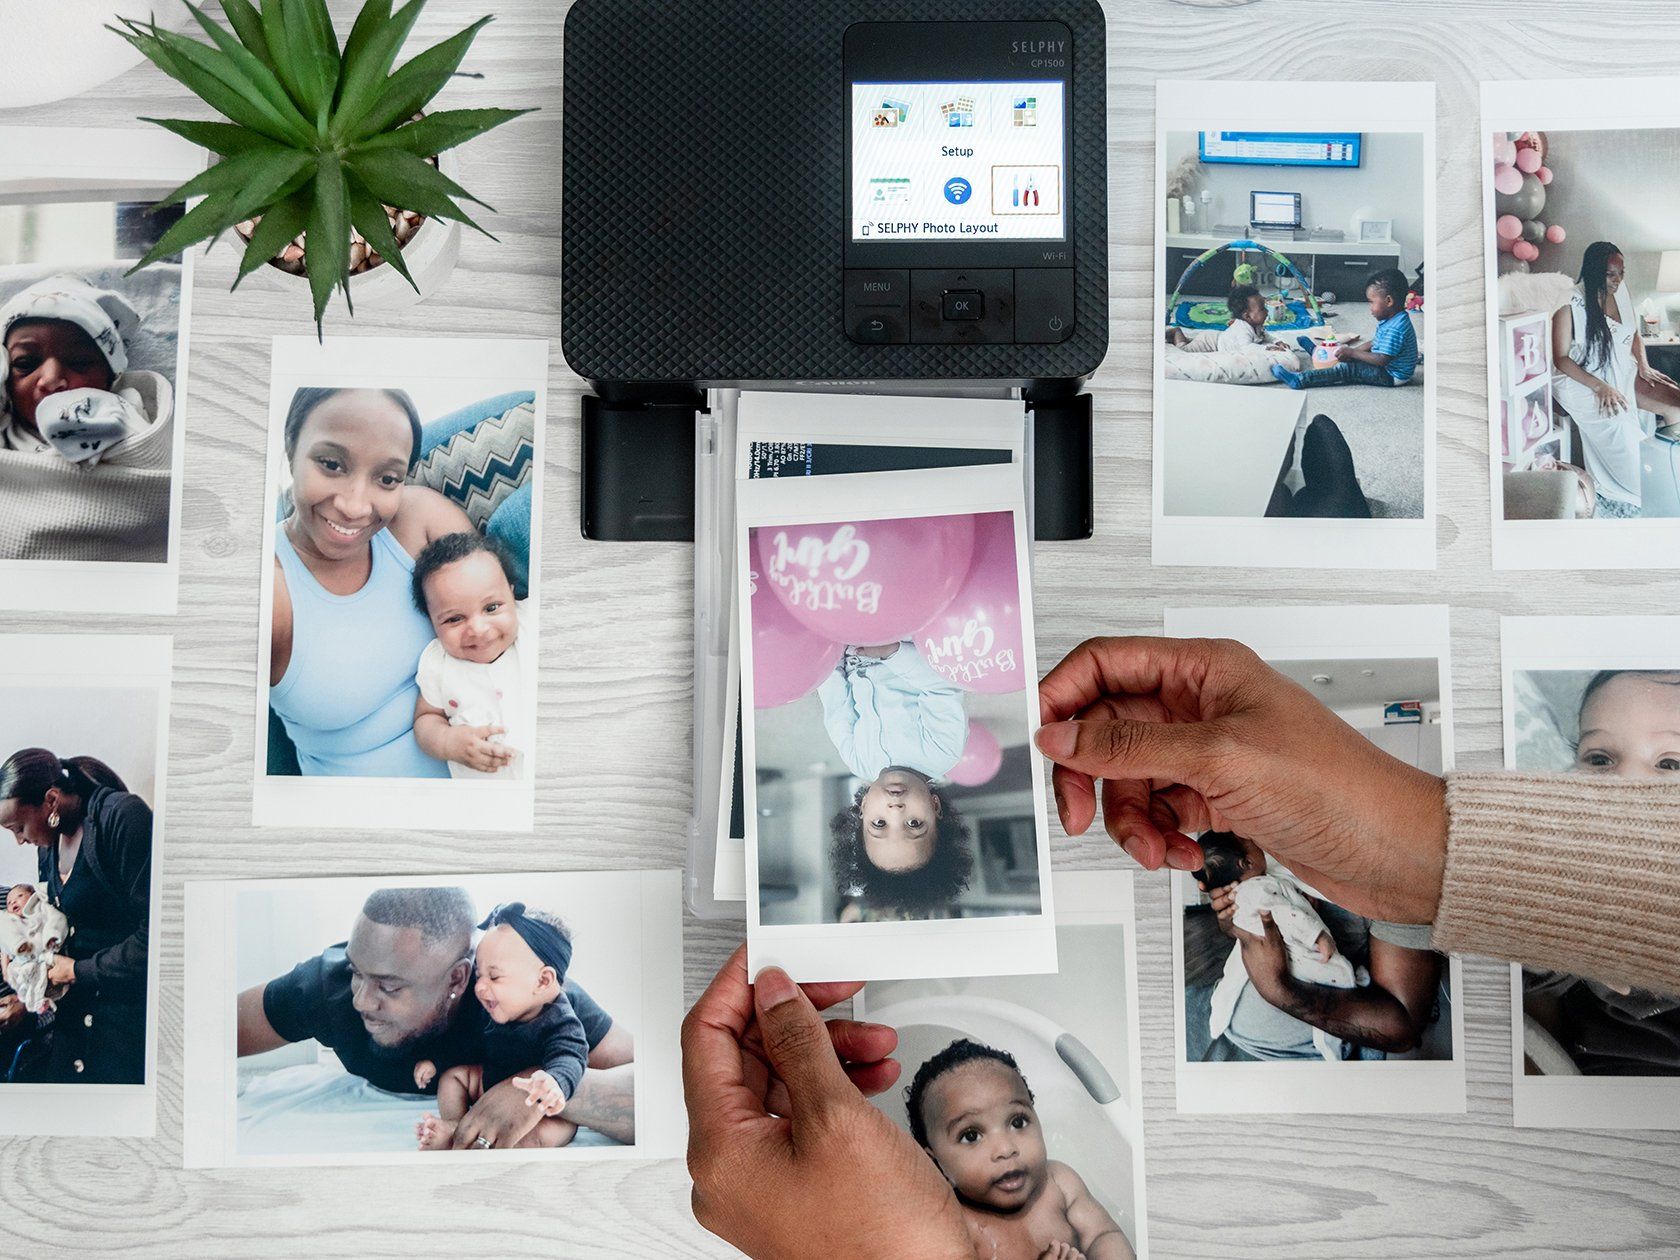 Buy Canon SELPHY CP1500 Colour Portable Photo Printer - Black — Canon UAE  Store